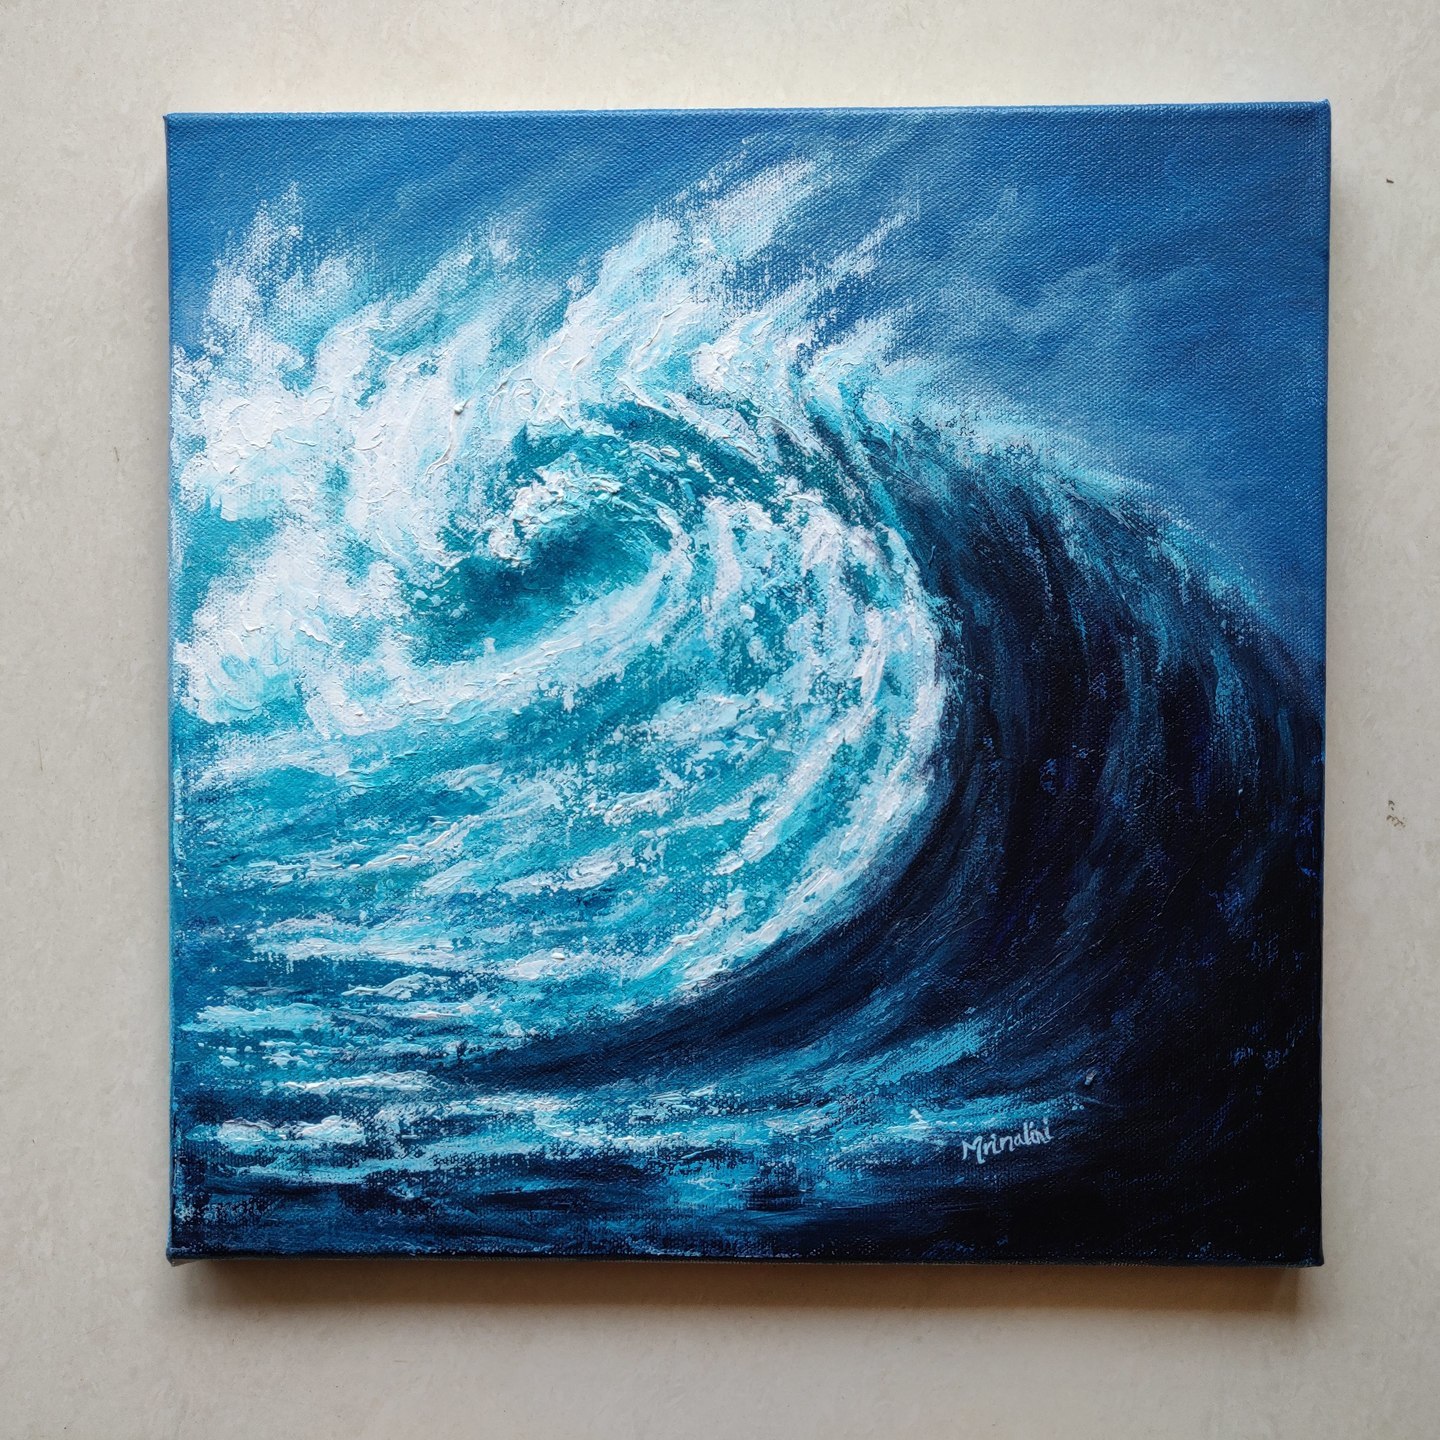 Abstract Crashing Ocean wave original acrylic painting on canvas